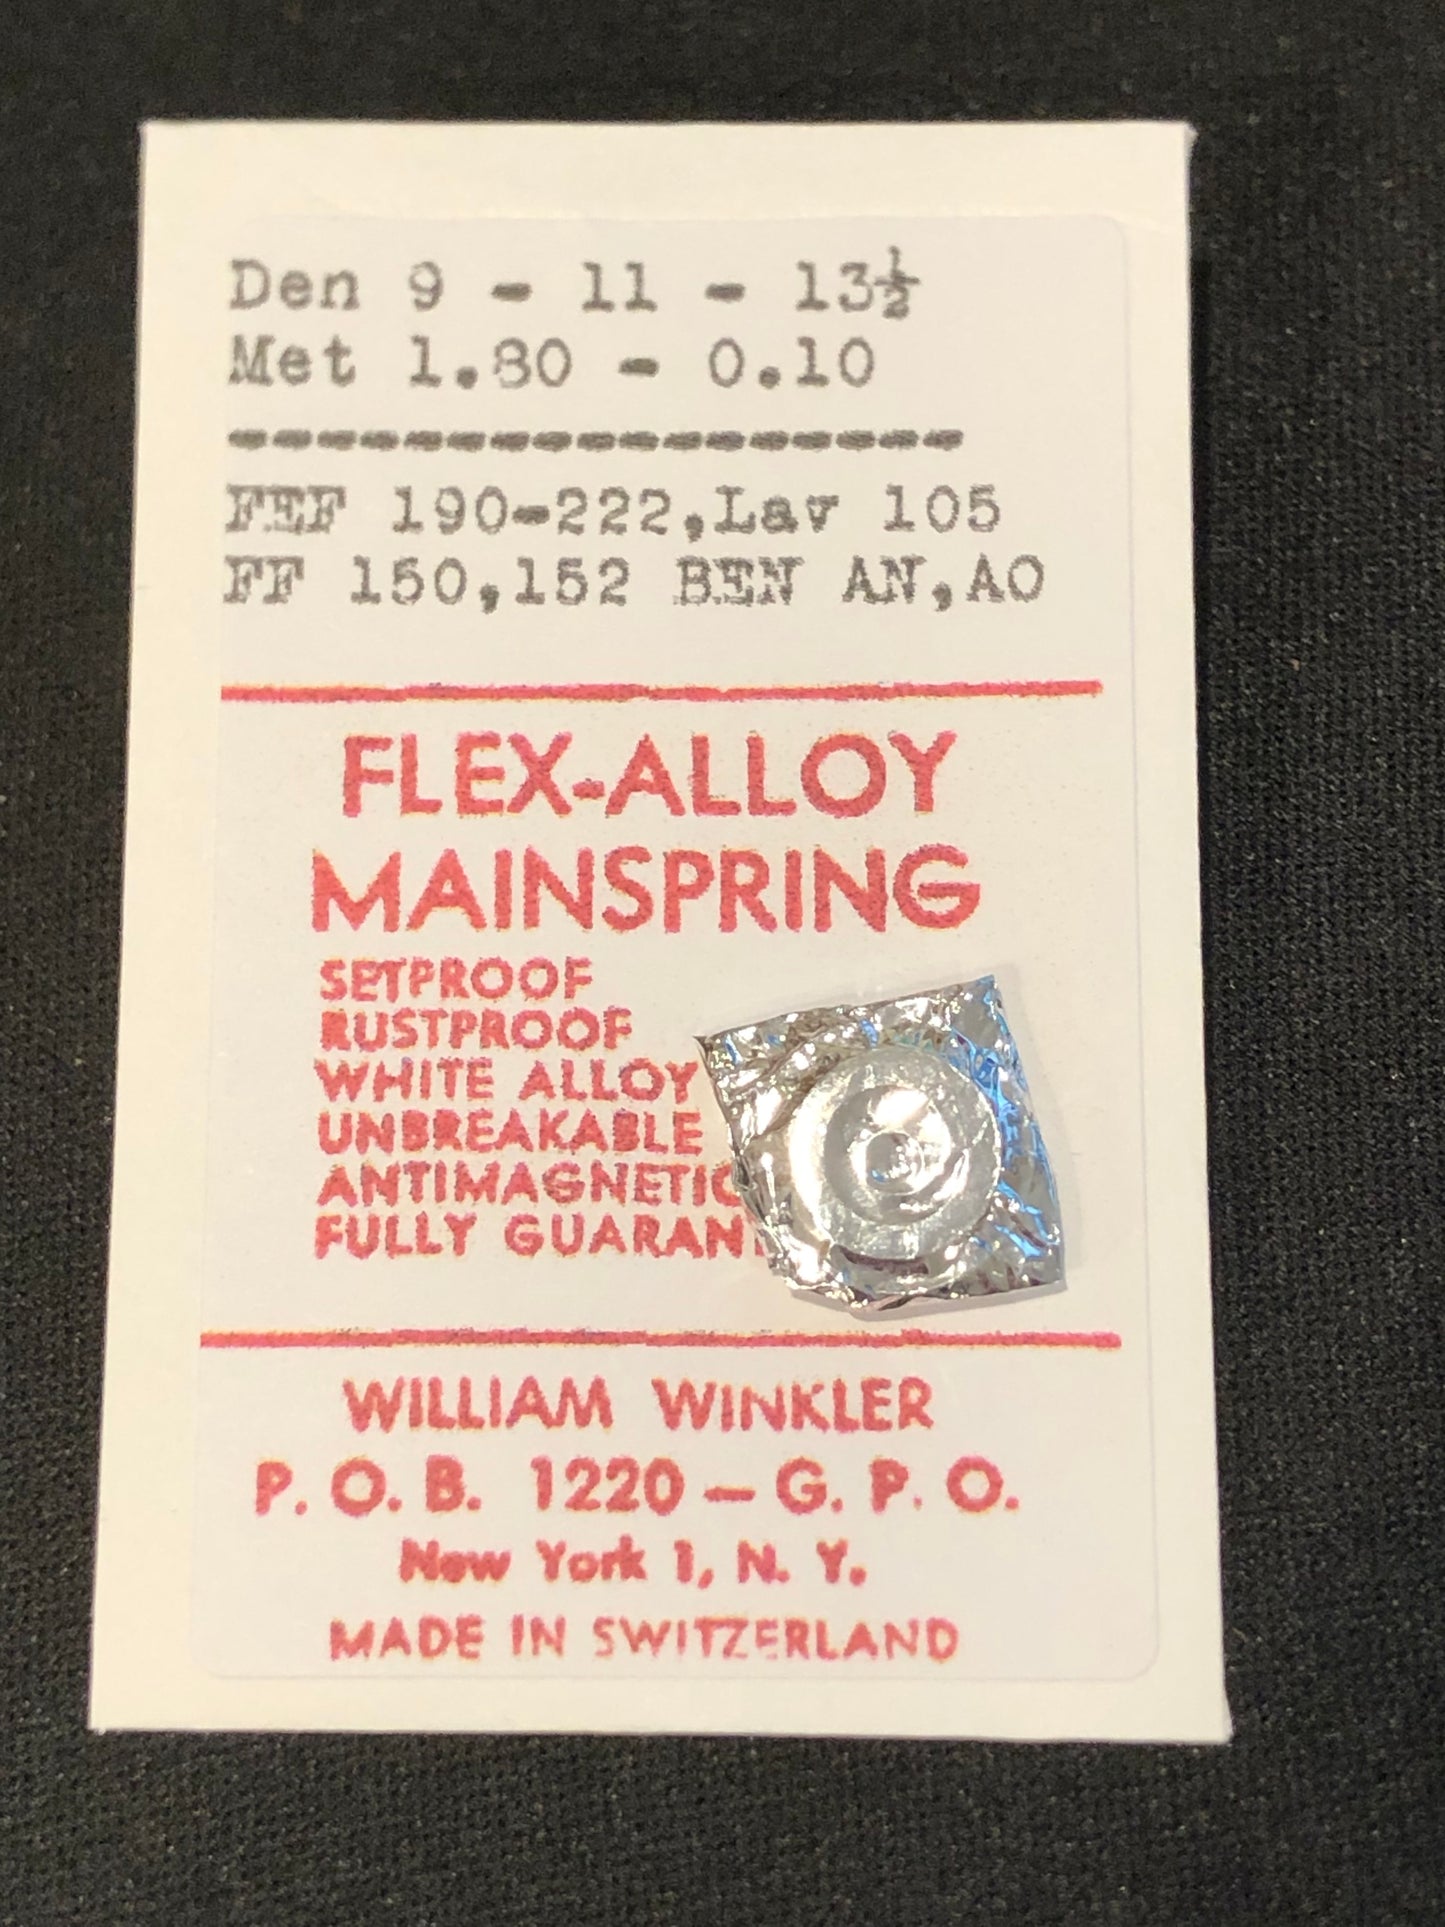 Flex-Alloy Mainspring for FEF 190 - 222, Lavina 105, Font 150, 152 - Alloy